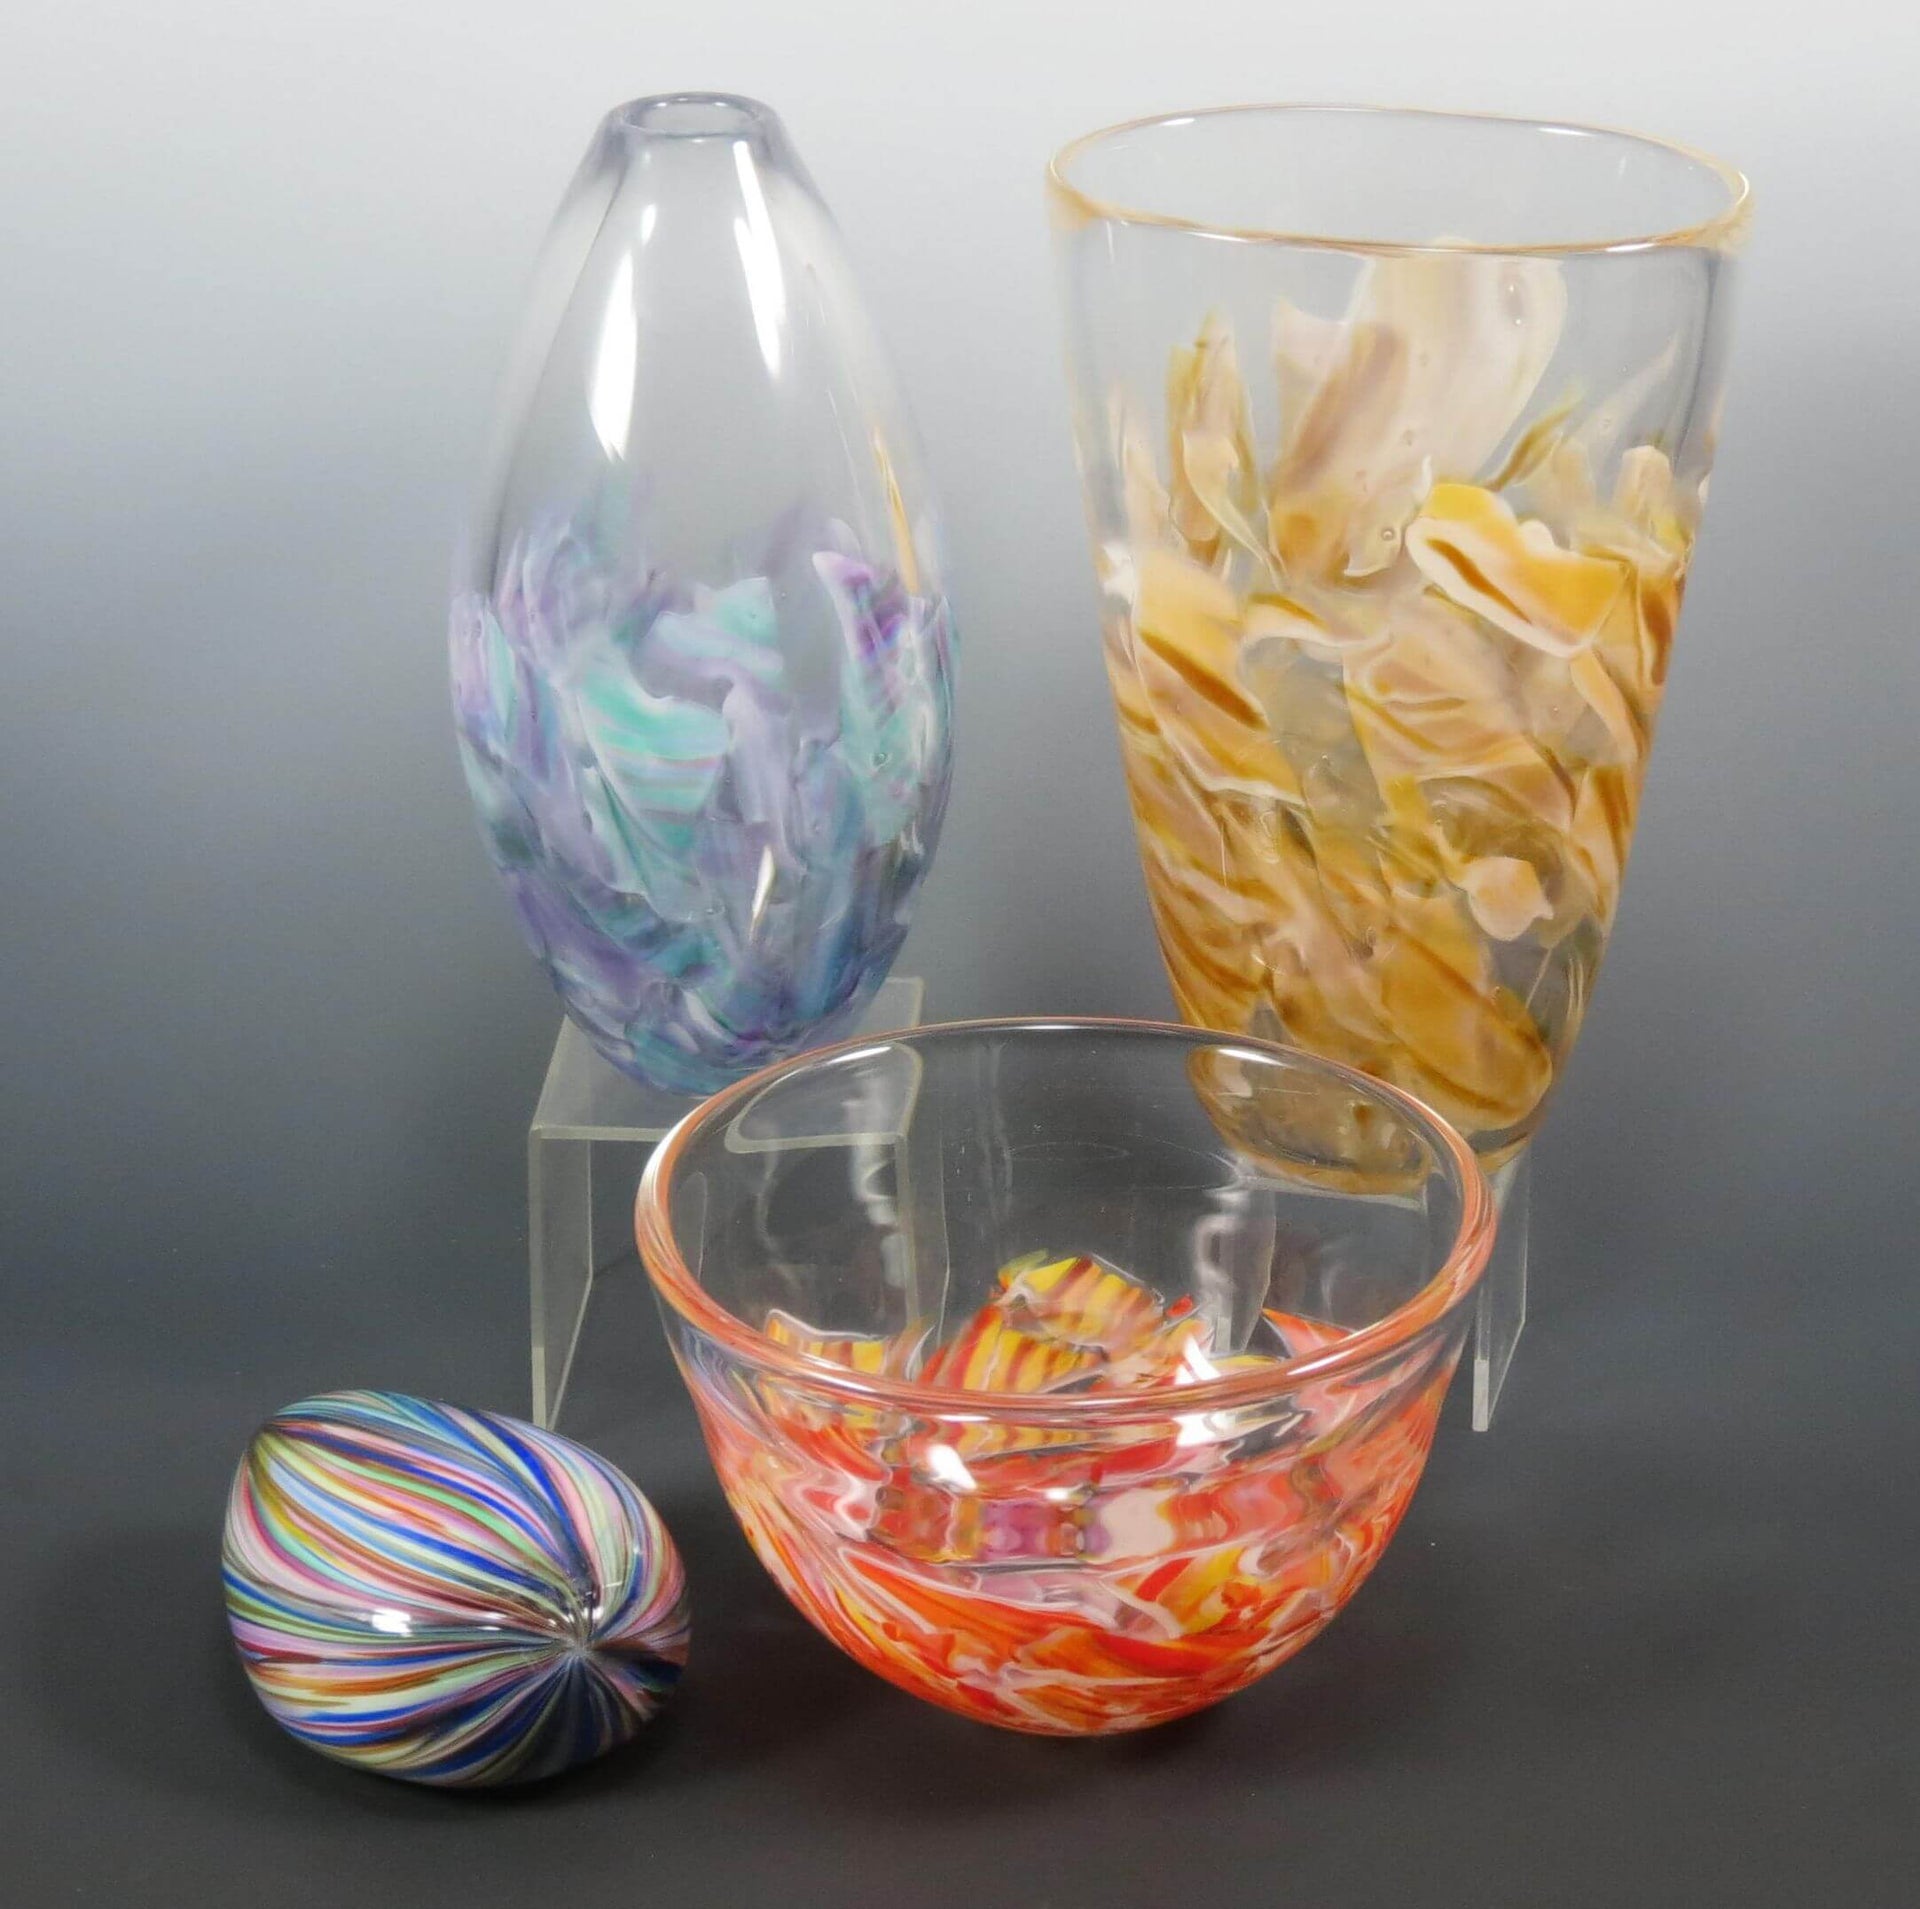 Rosetree Glass Studio Smash Glass Glass Smash Glass Round Paperweight by Rosetree Glass Studio